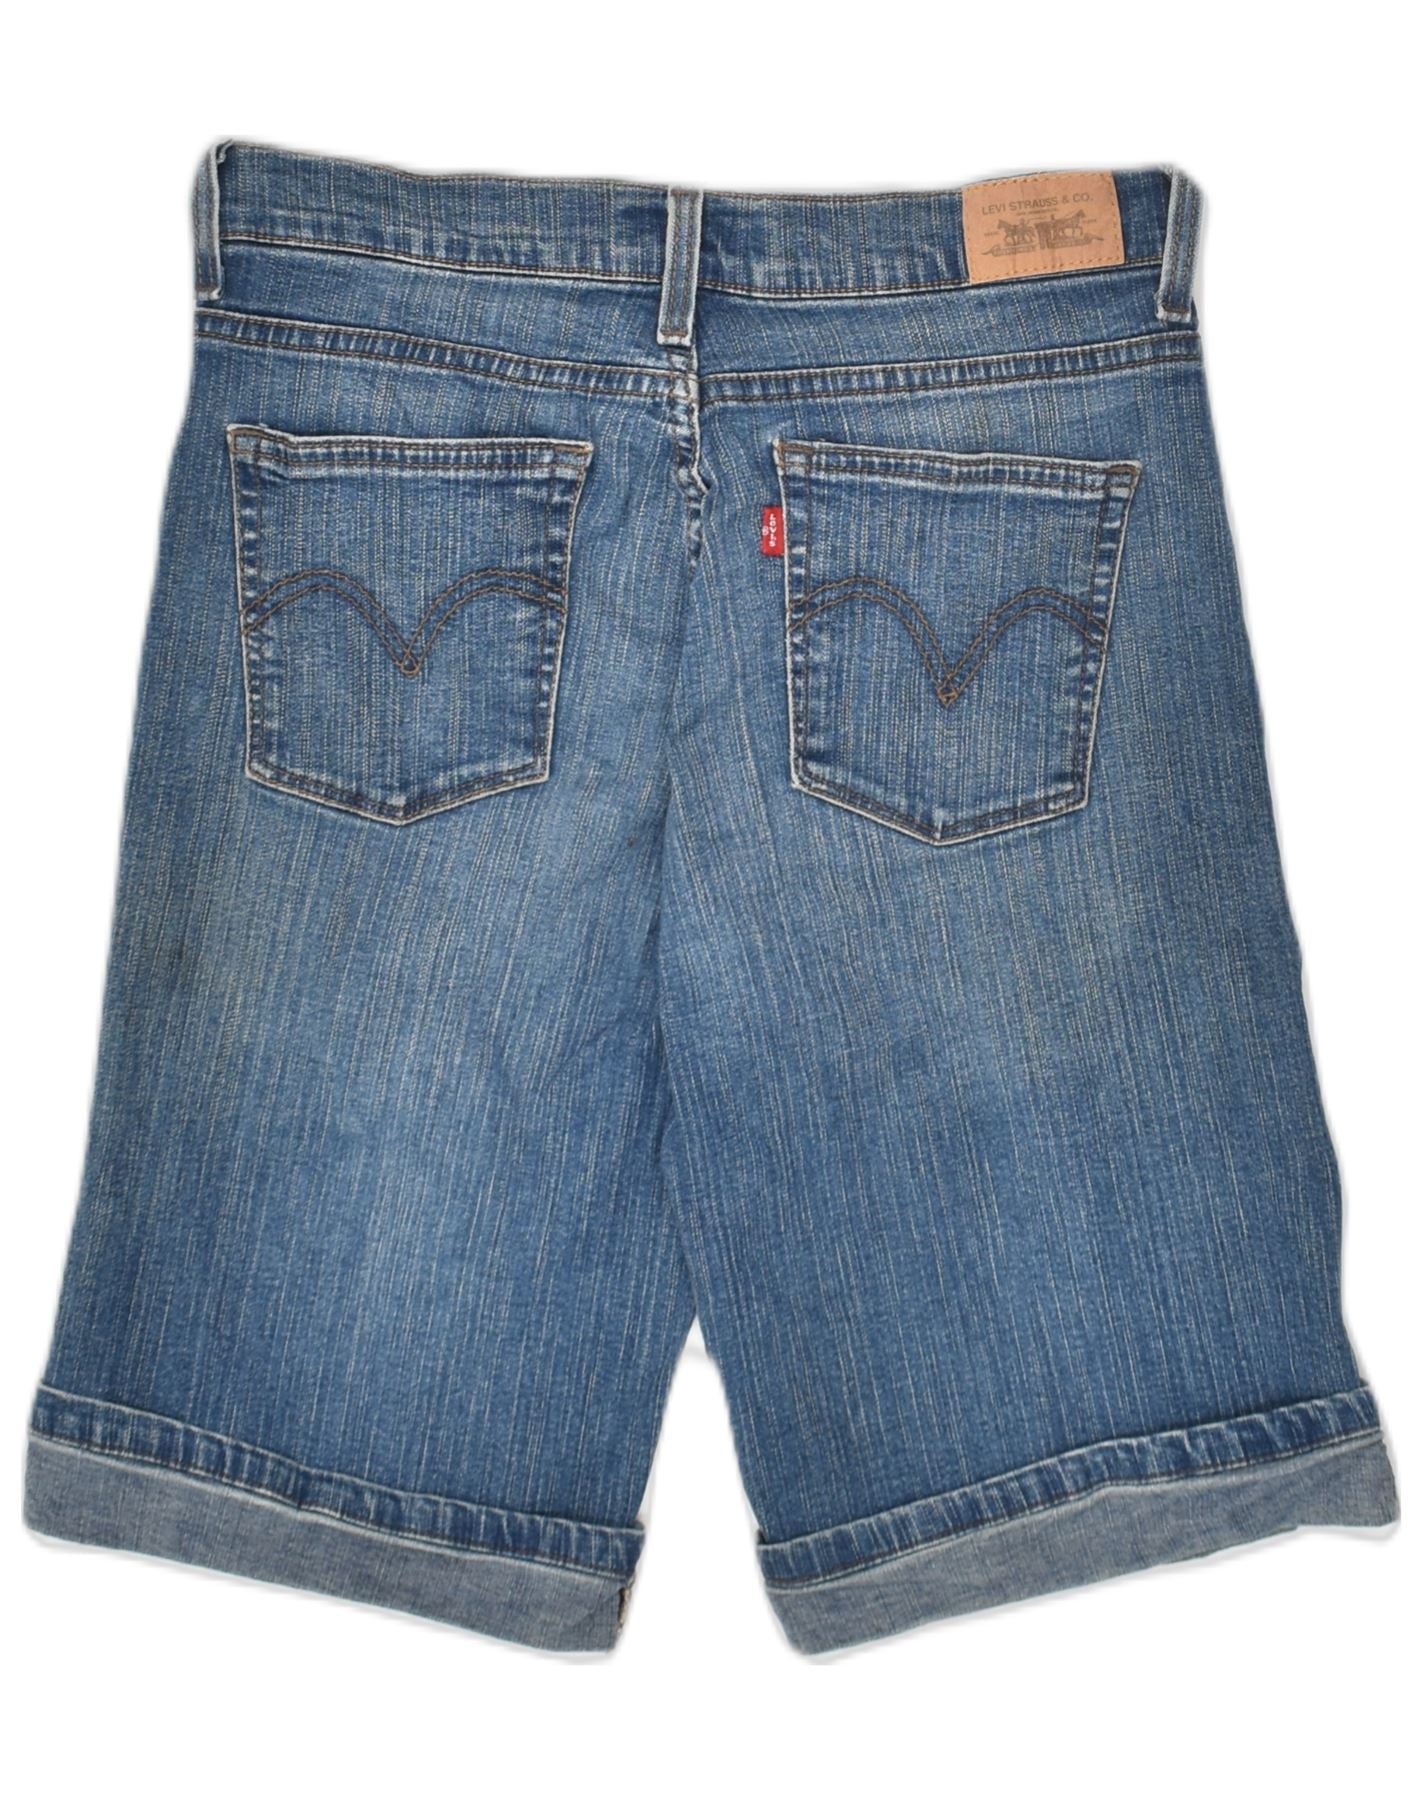 LEVI'S Womens Denim Shorts W30 Medium Blue Cotton, Vintage & Second-Hand  Clothing Online